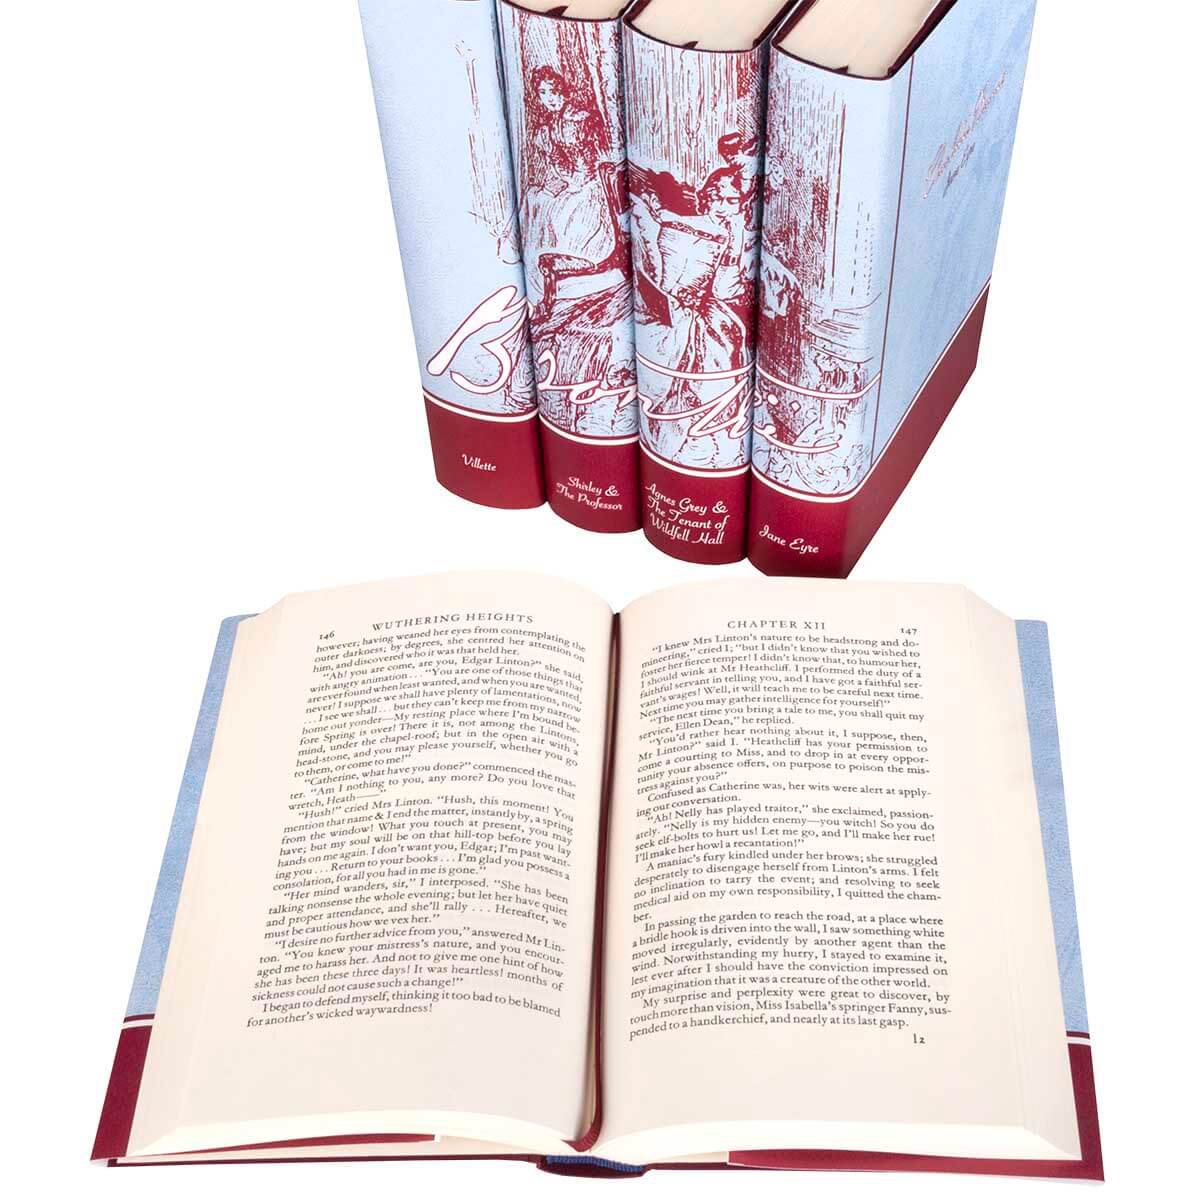 Classic Bronte Sisters book set from JuniperCustom